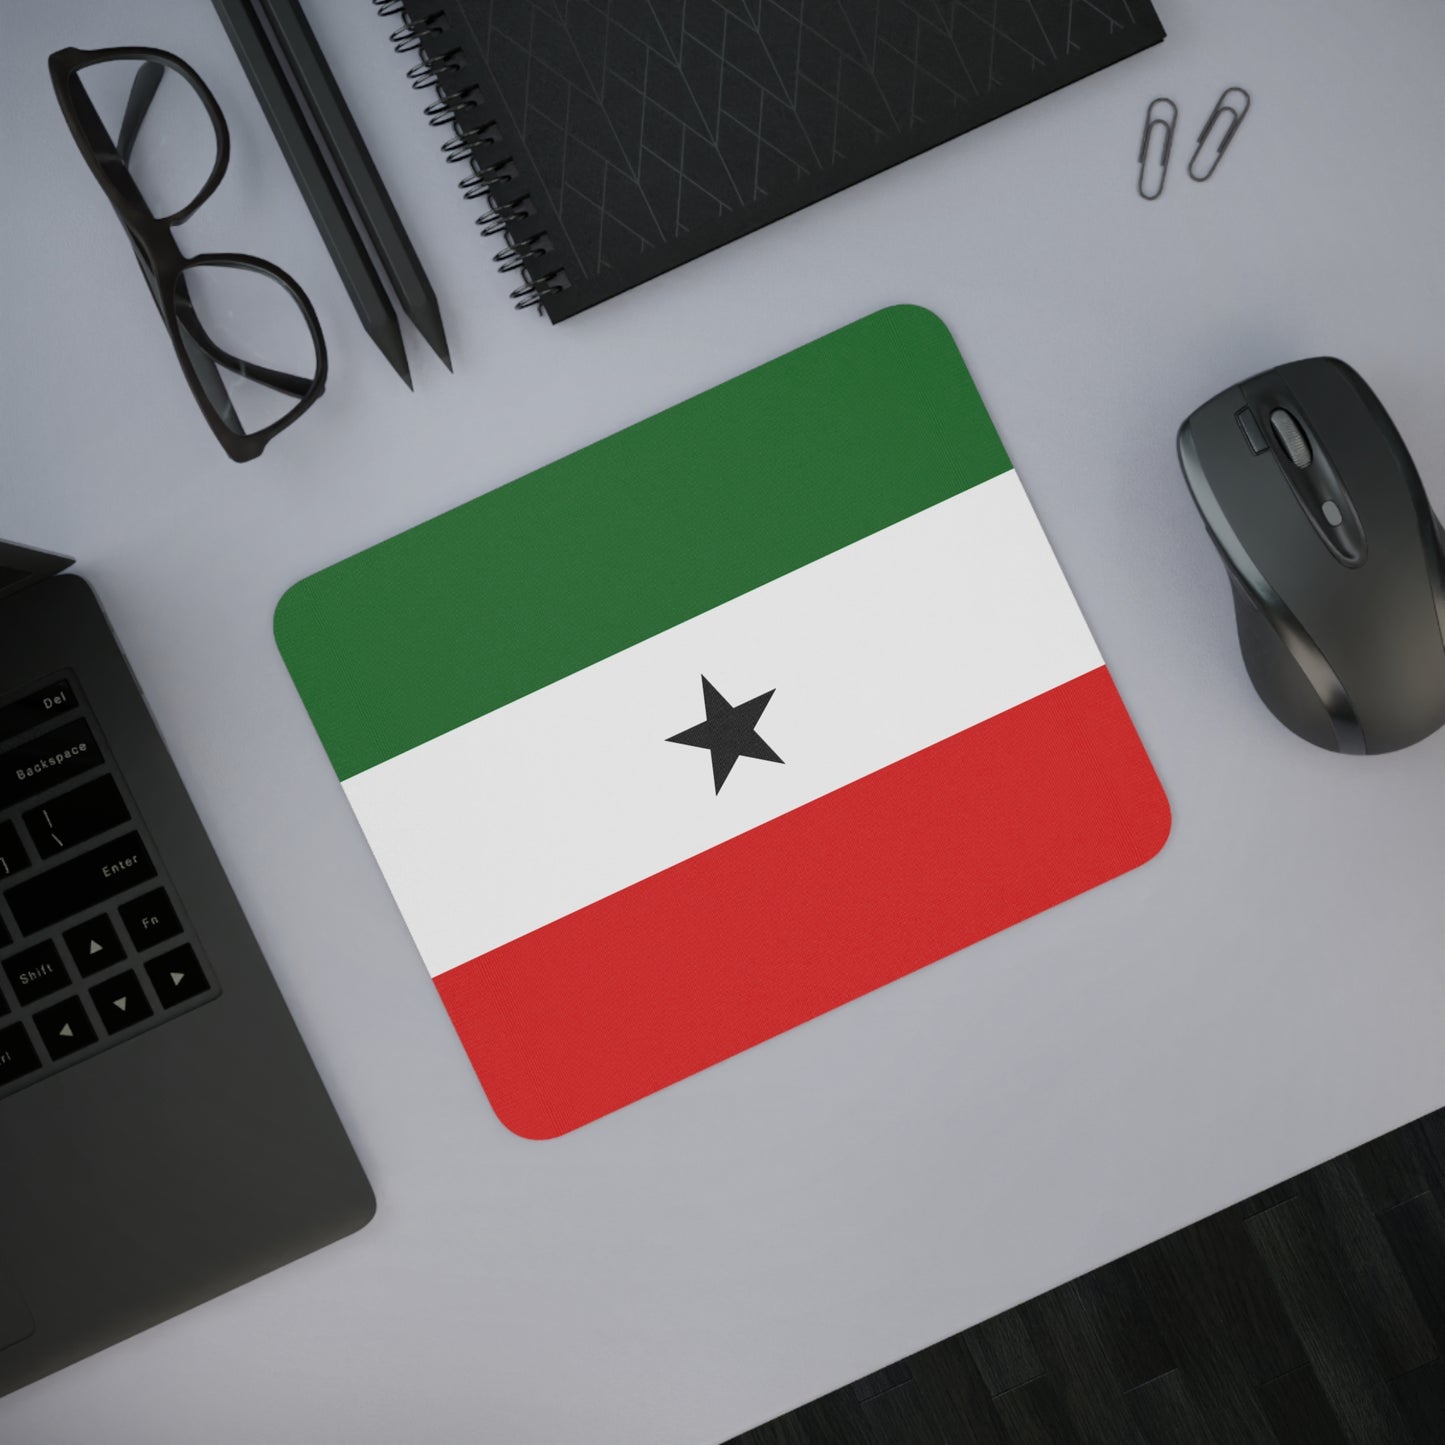 Desk Mouse Pad - Somaliland Flag